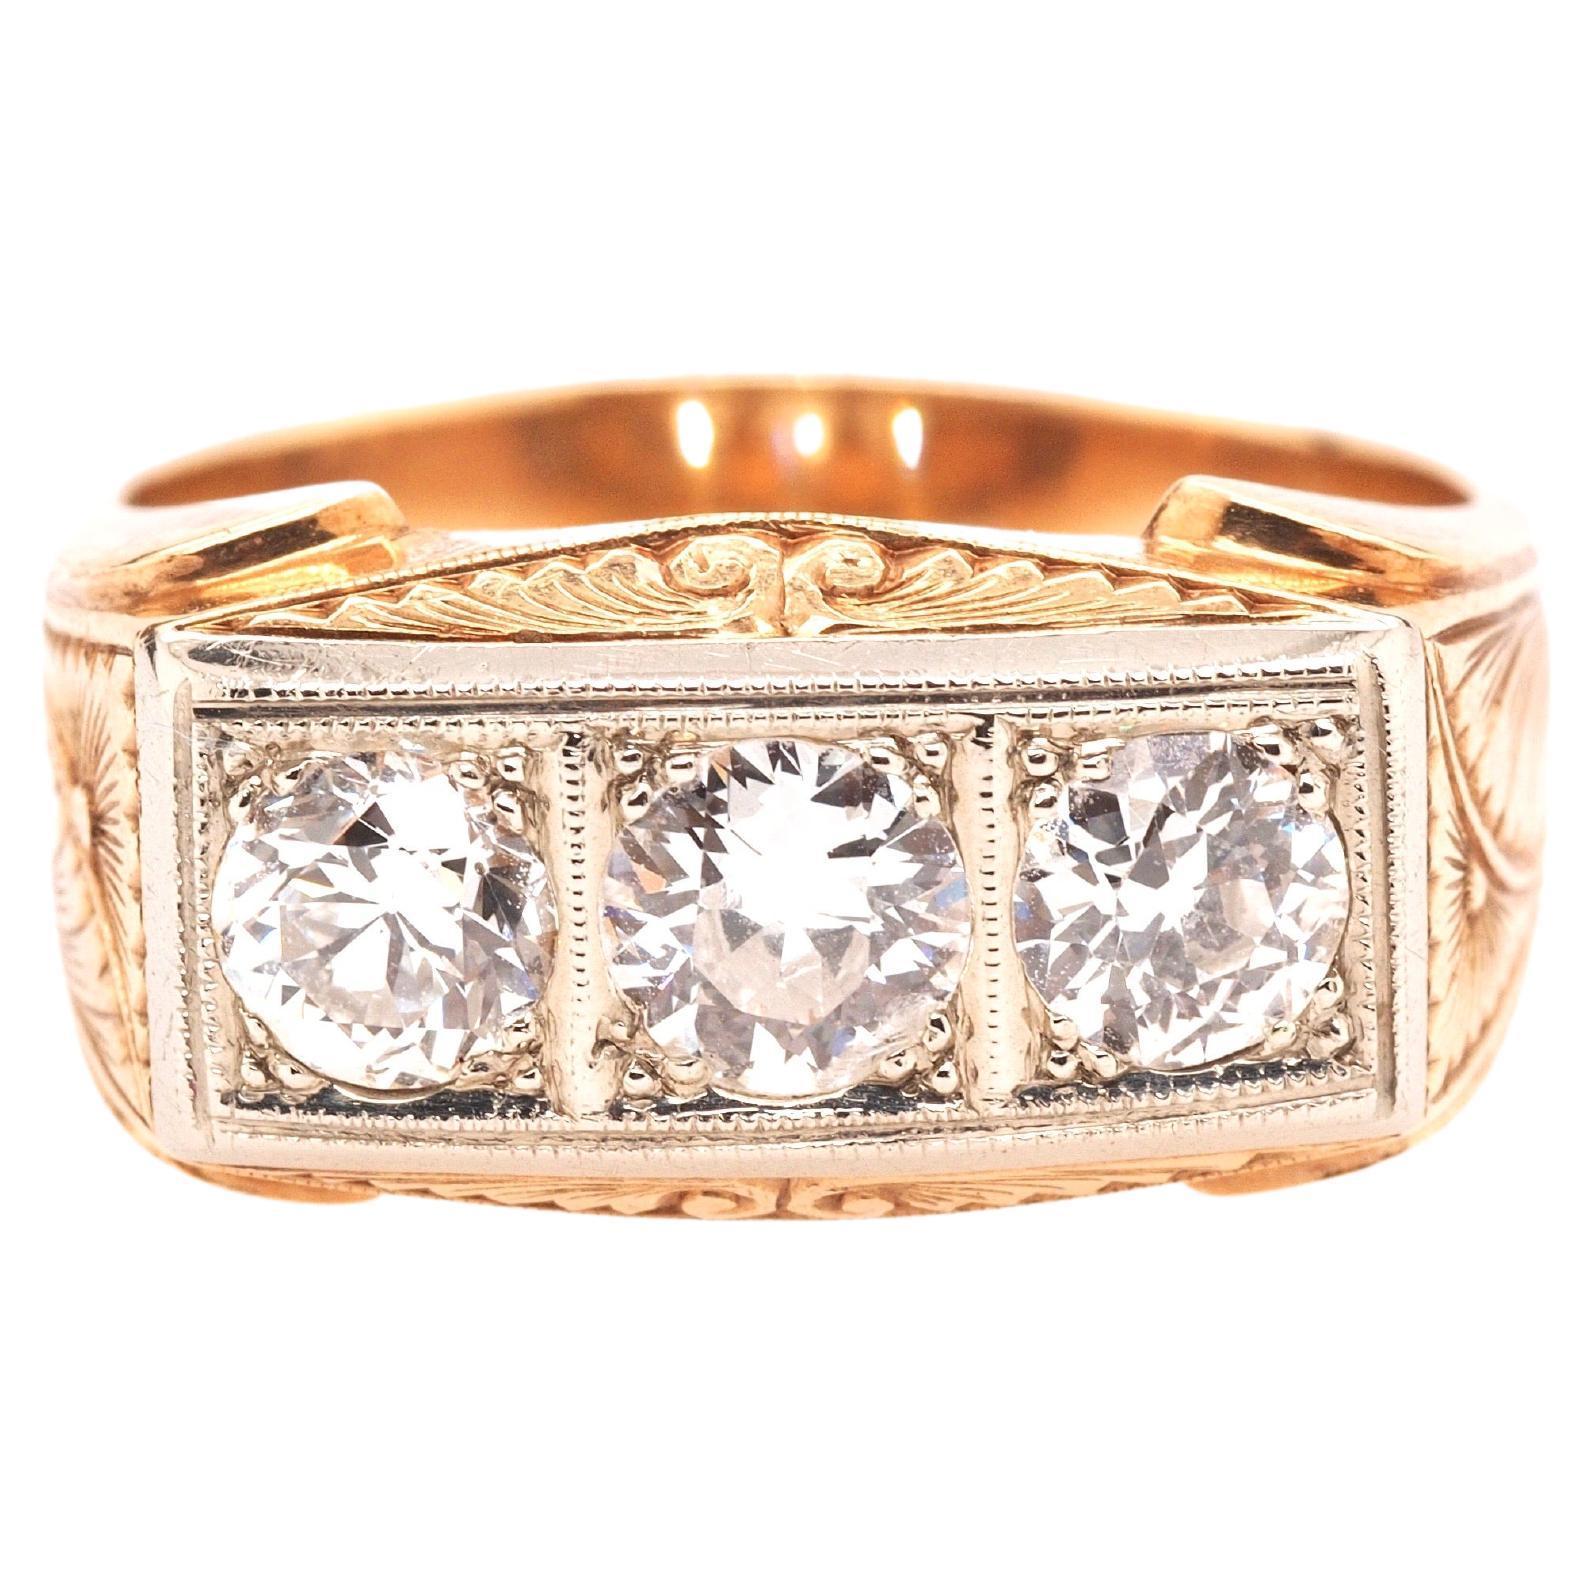 Circa 1900s 14K Yellow Gold Edwardian 1.30ct Diamond Engagement Ring w Engraving For Sale